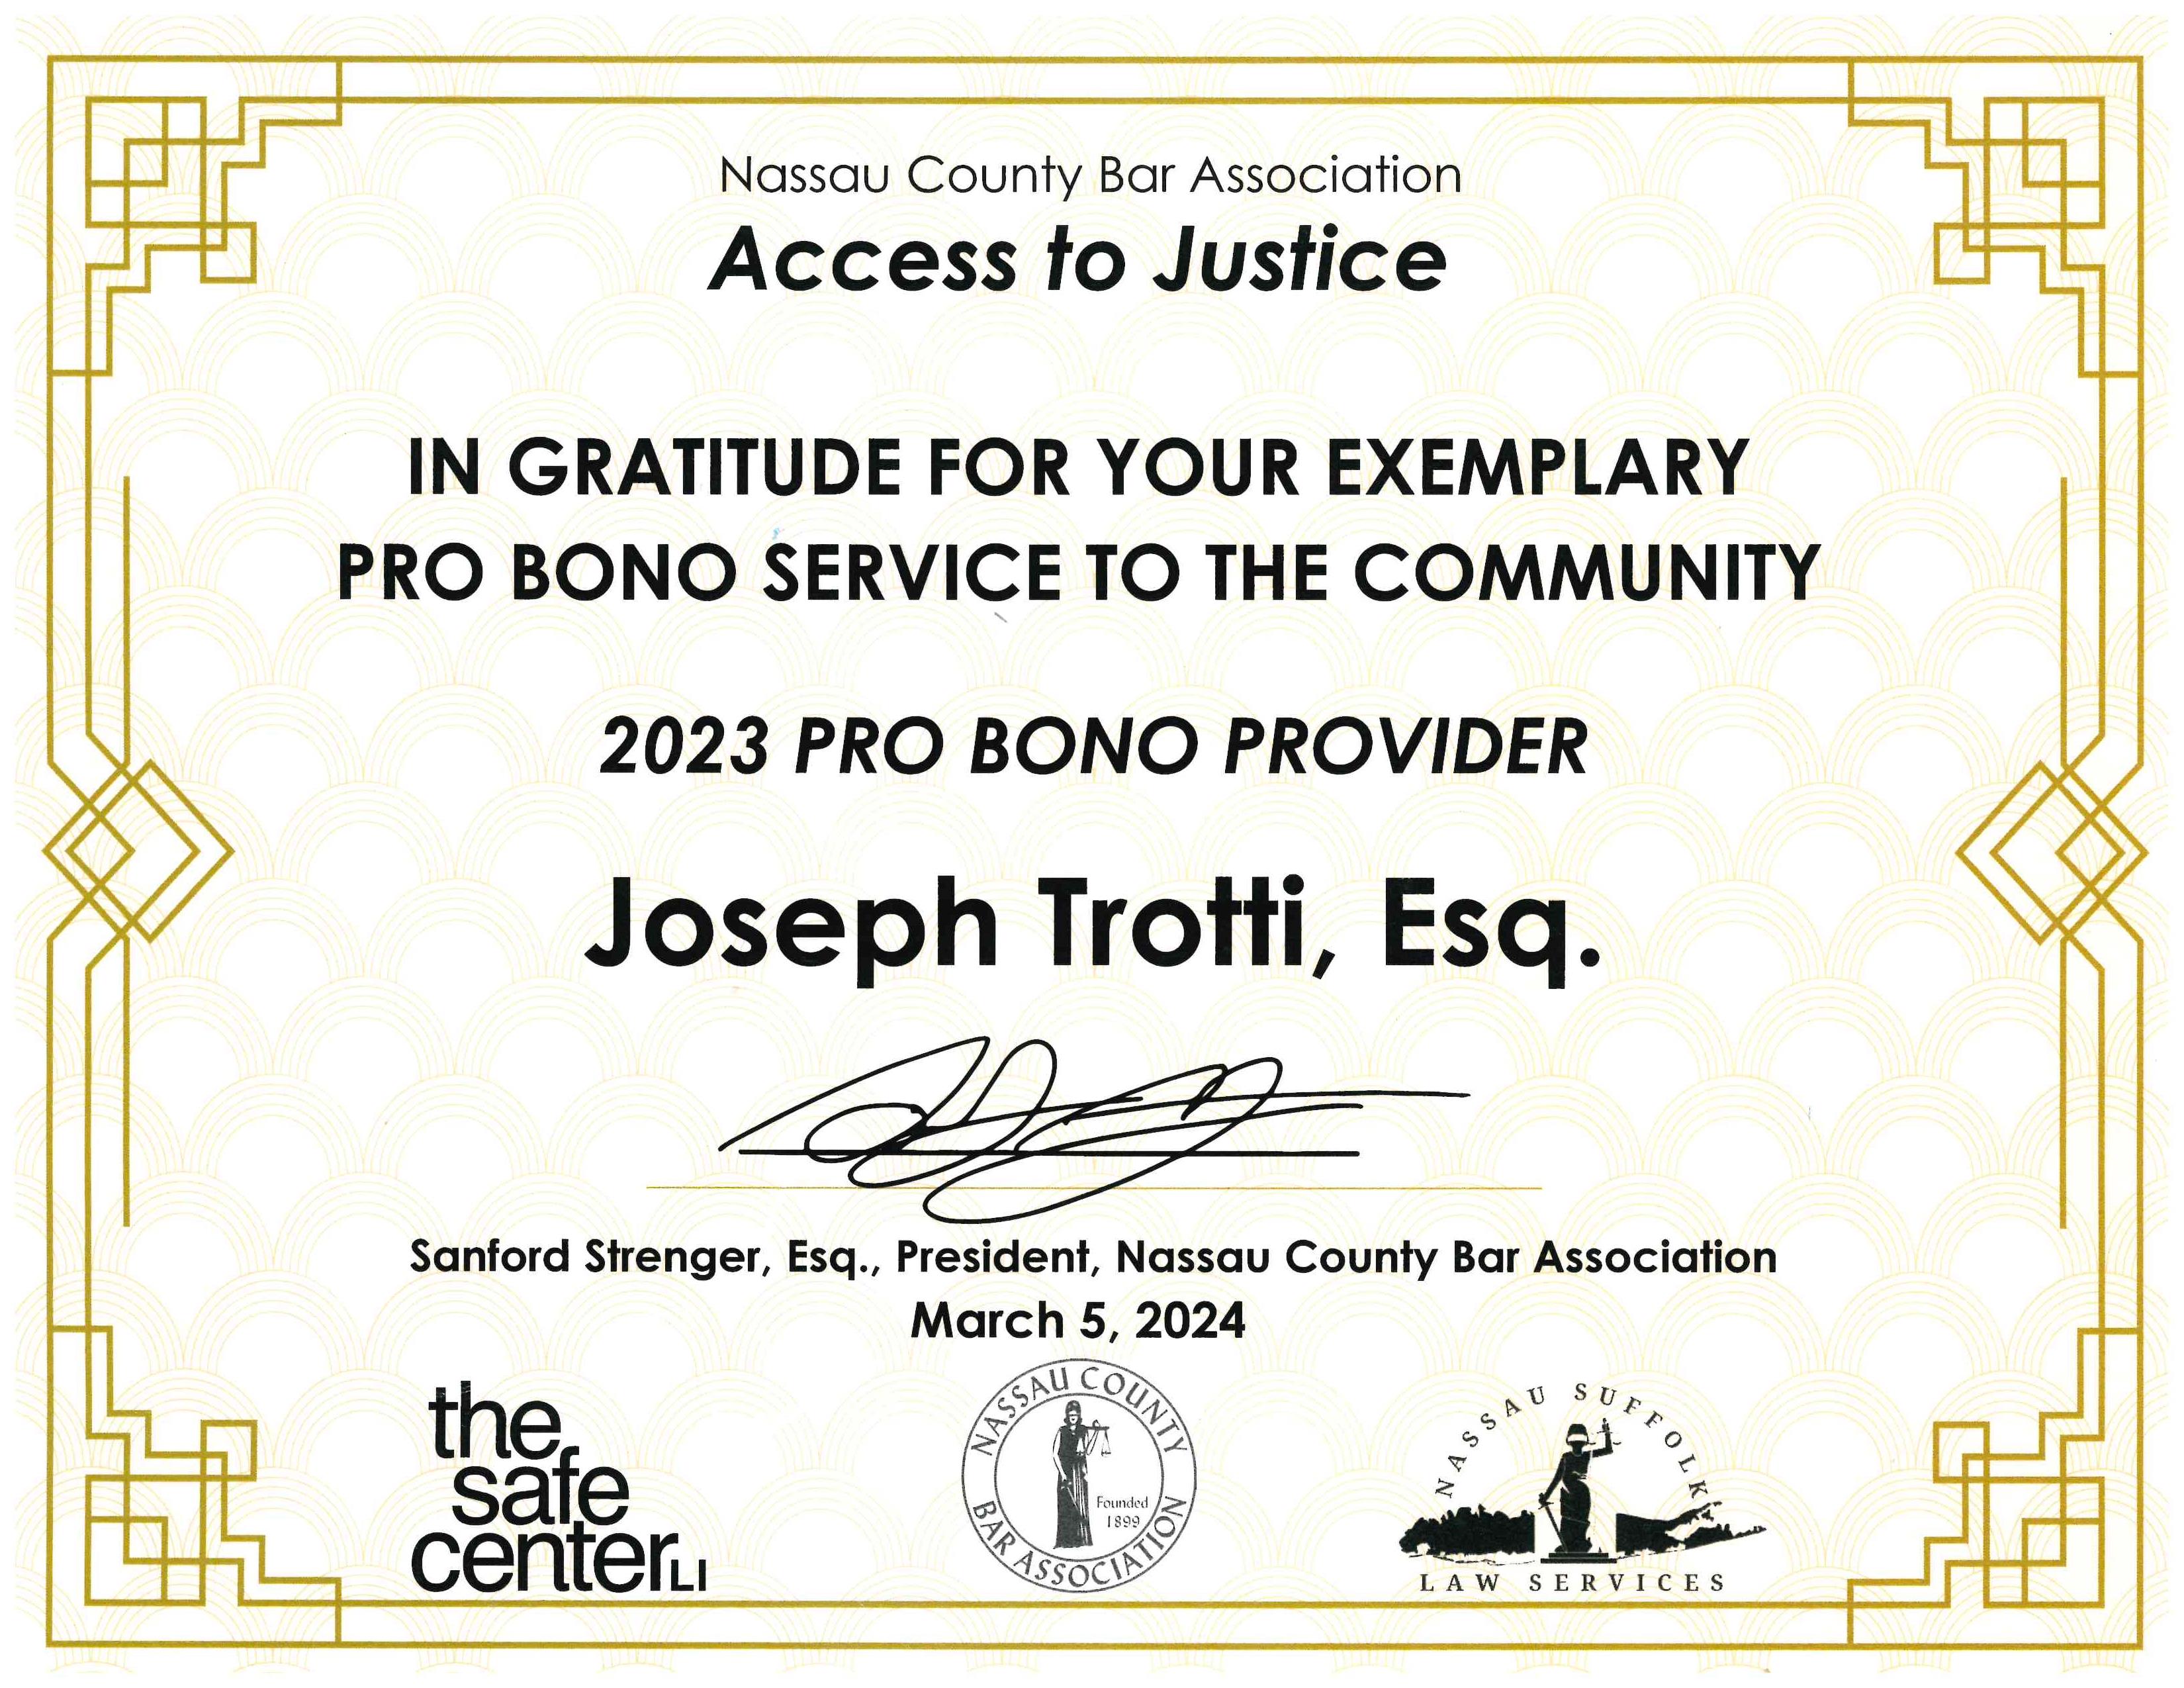 Nassau County Bar Association Award